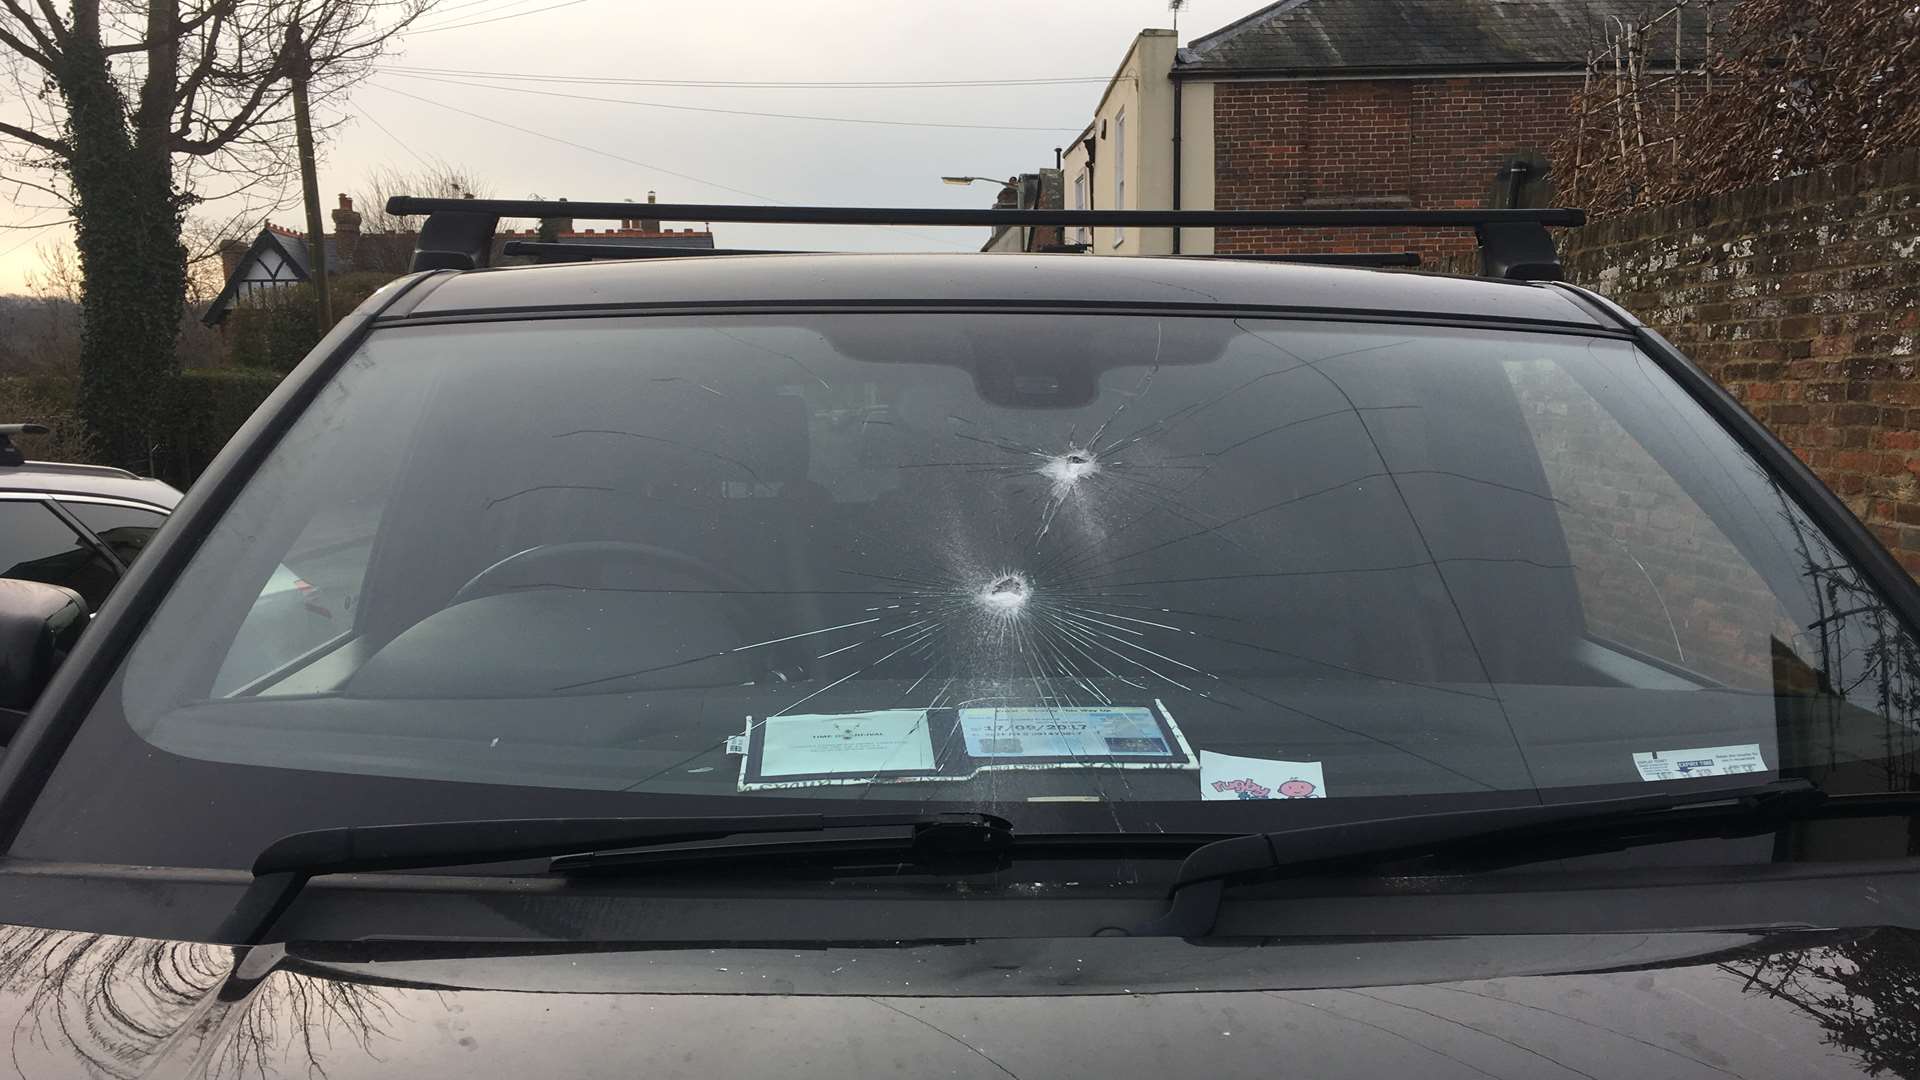 Kerry-Anne Hatcher's car was vandalised